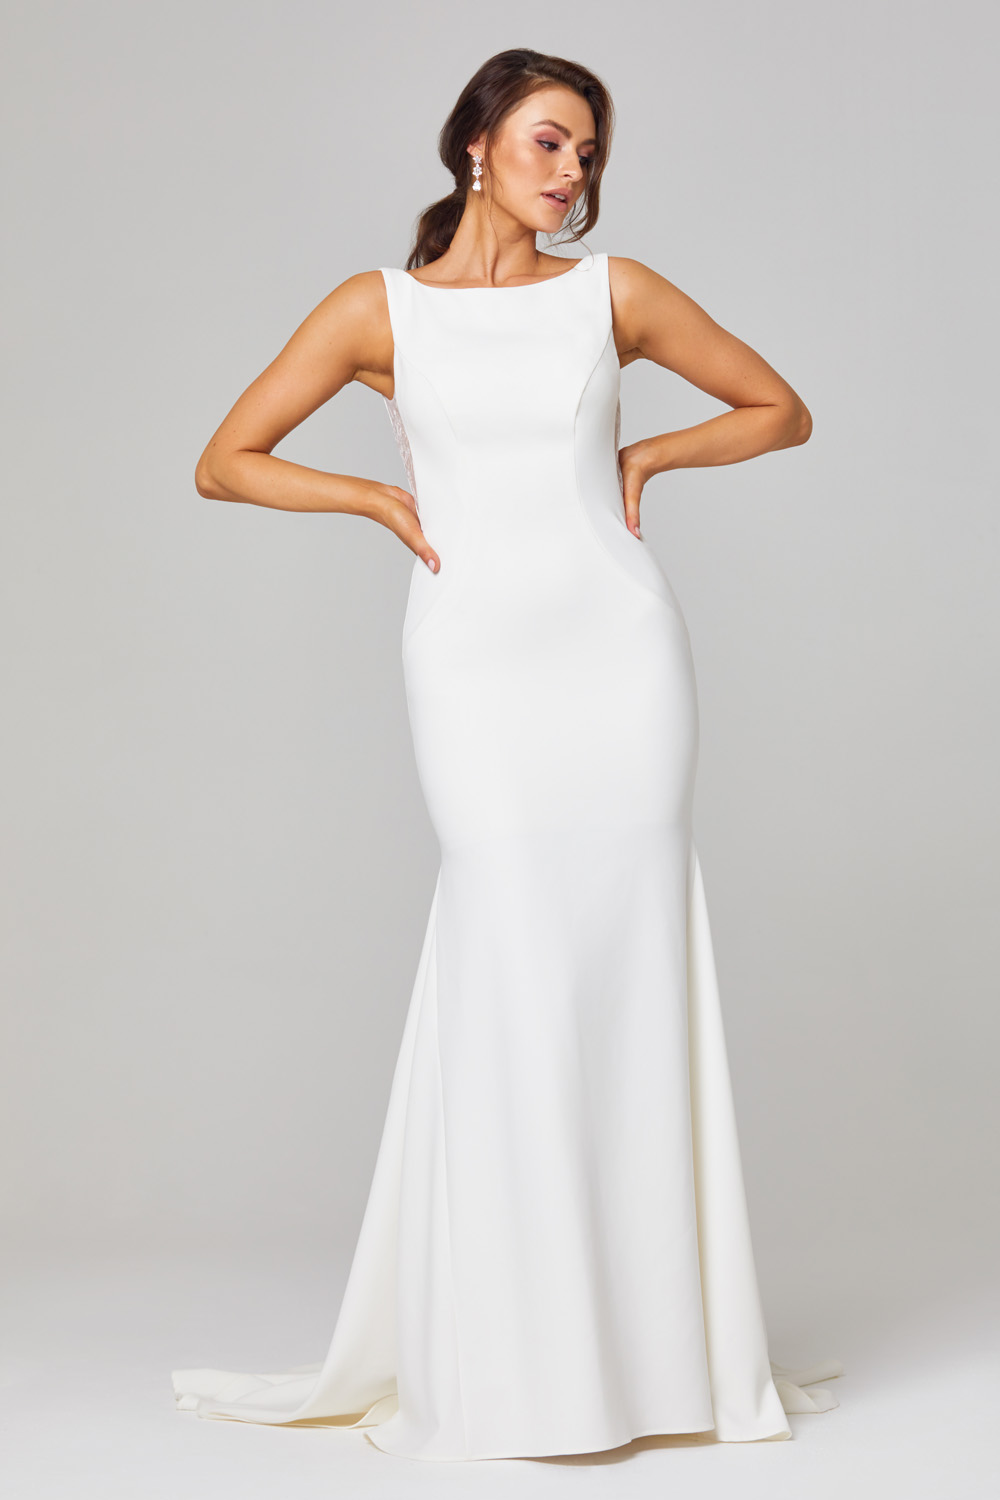 JEMMA TC301 Wedding Dresses dress by Tania Olsen Designs